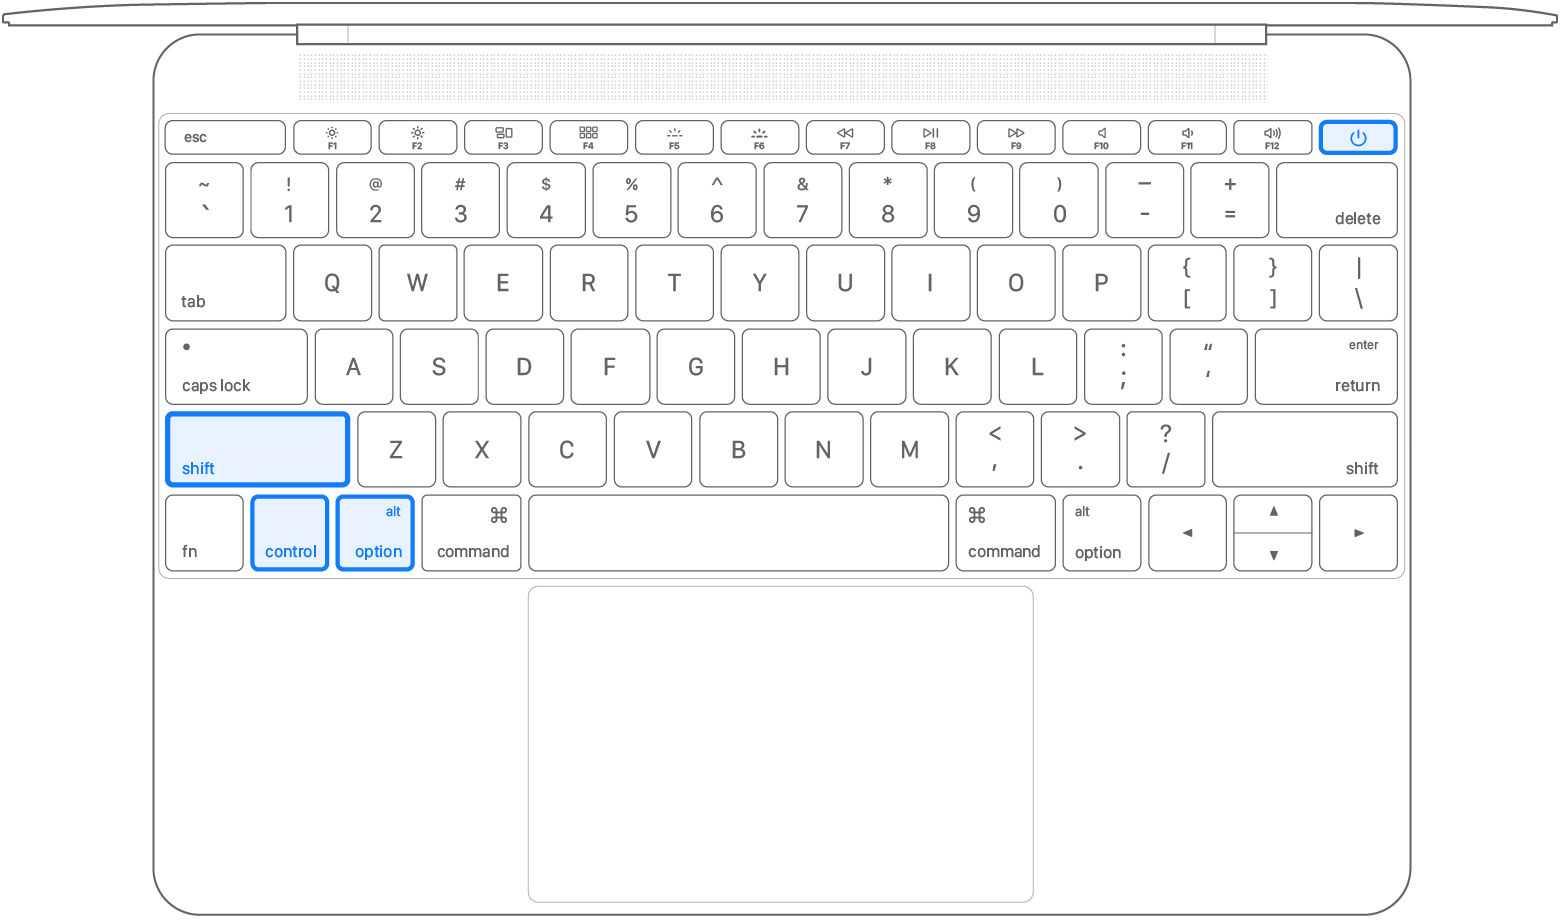 How to perform "ctrl-alt-delete" on your mac